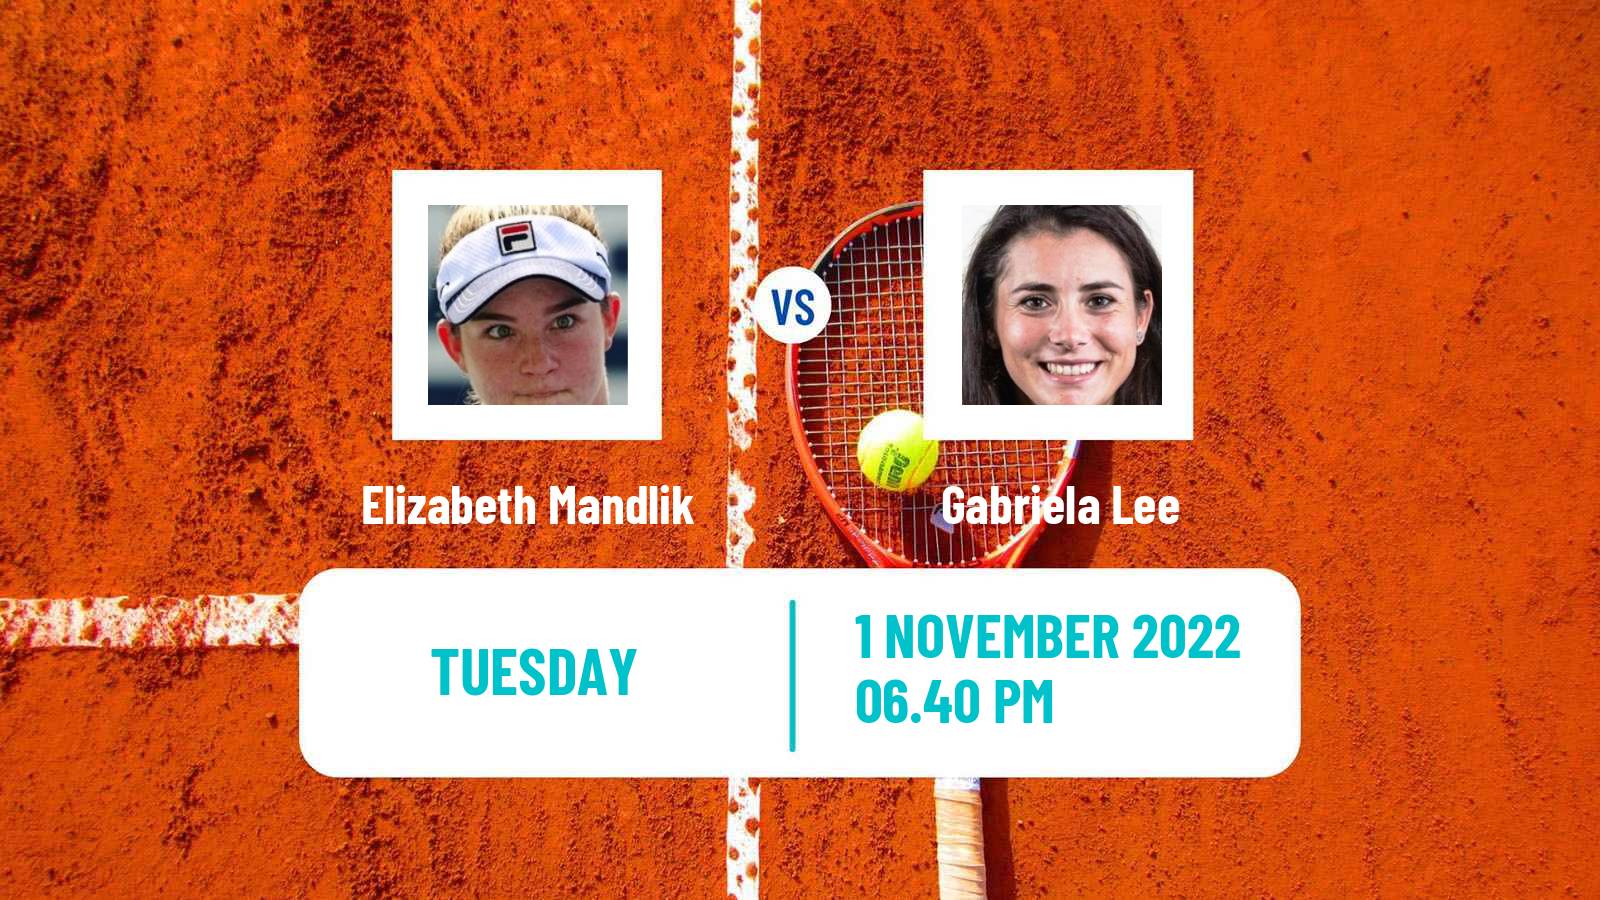 Tennis ATP Challenger Elizabeth Mandlik - Gabriela Lee